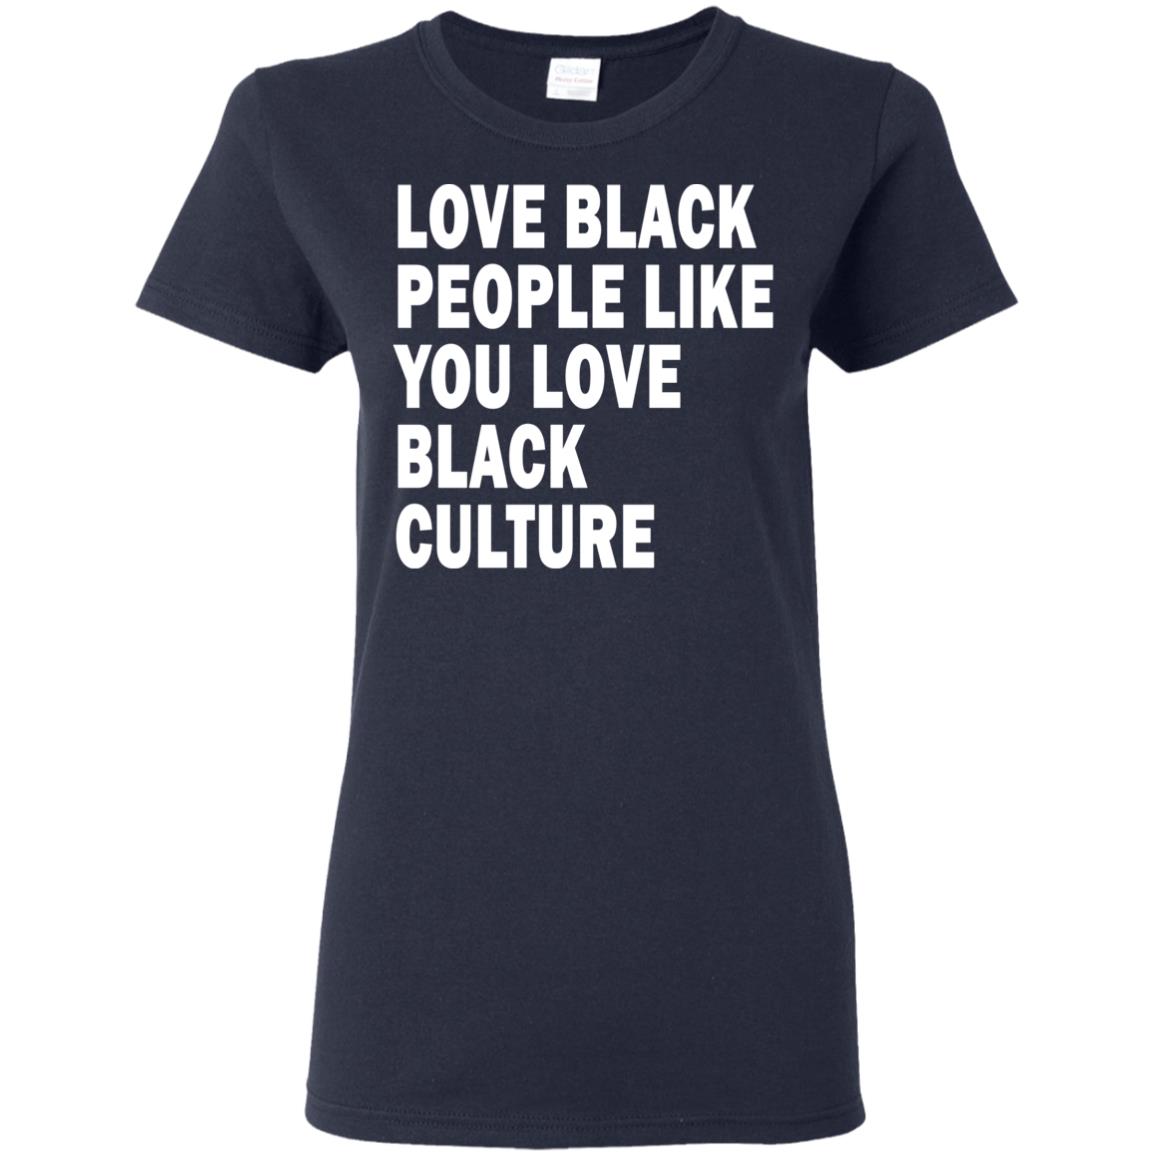 Love black people like you love black culture Shirt